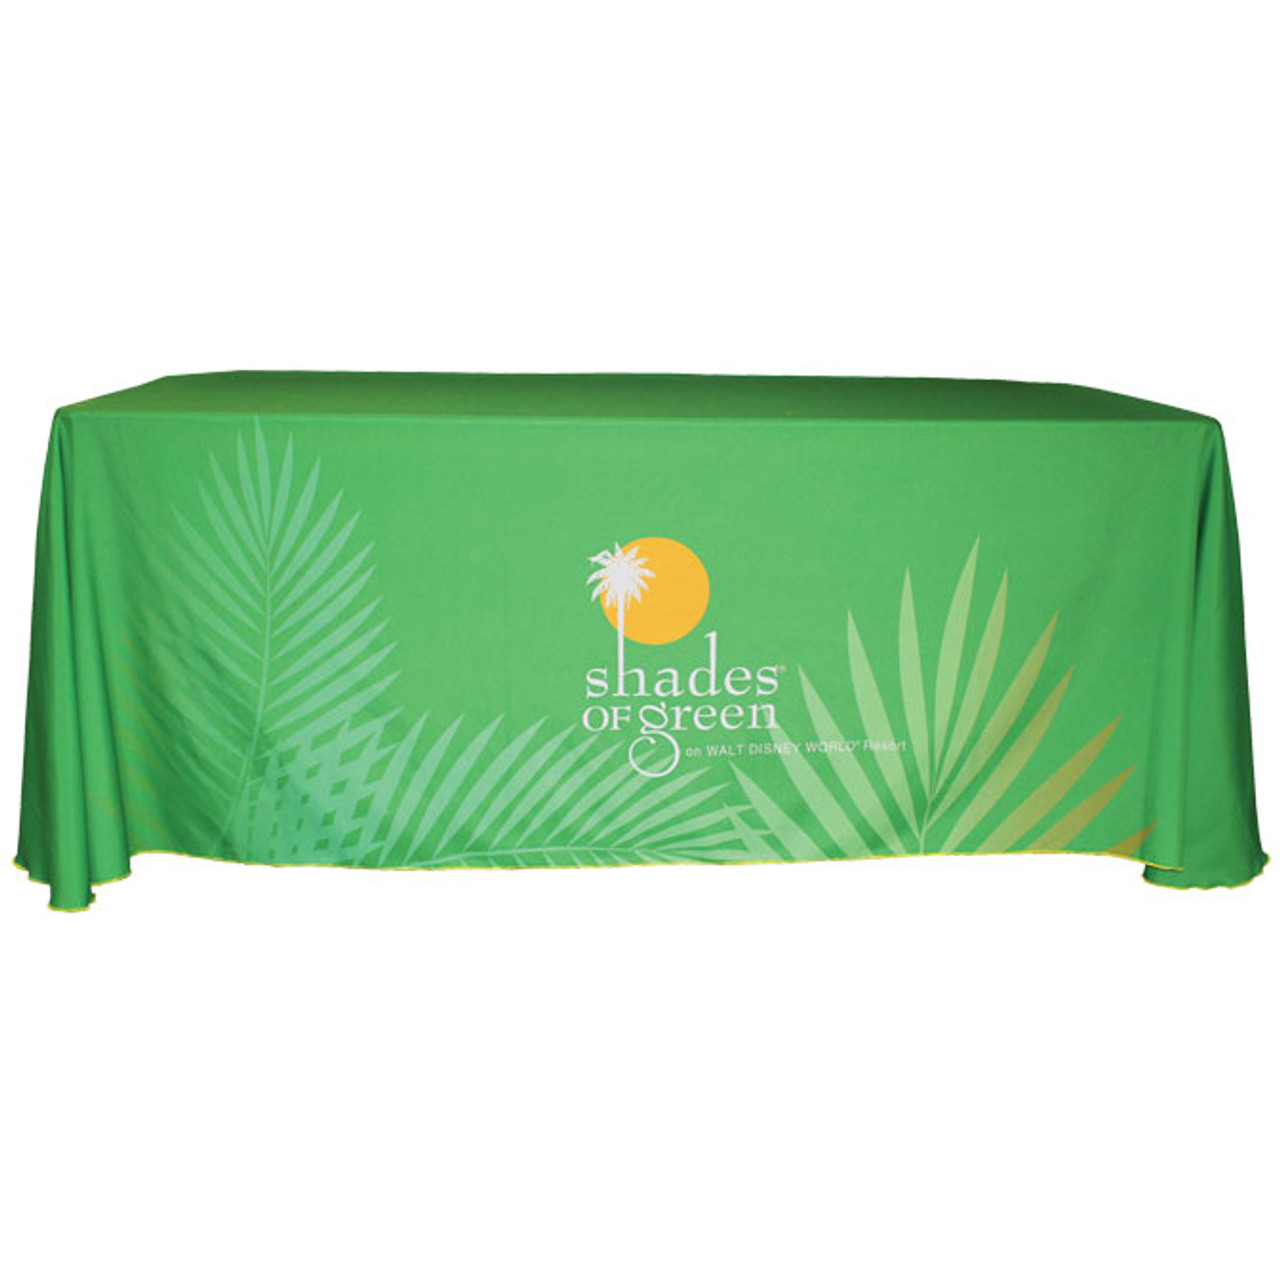 6' green custom printed draped table cover.